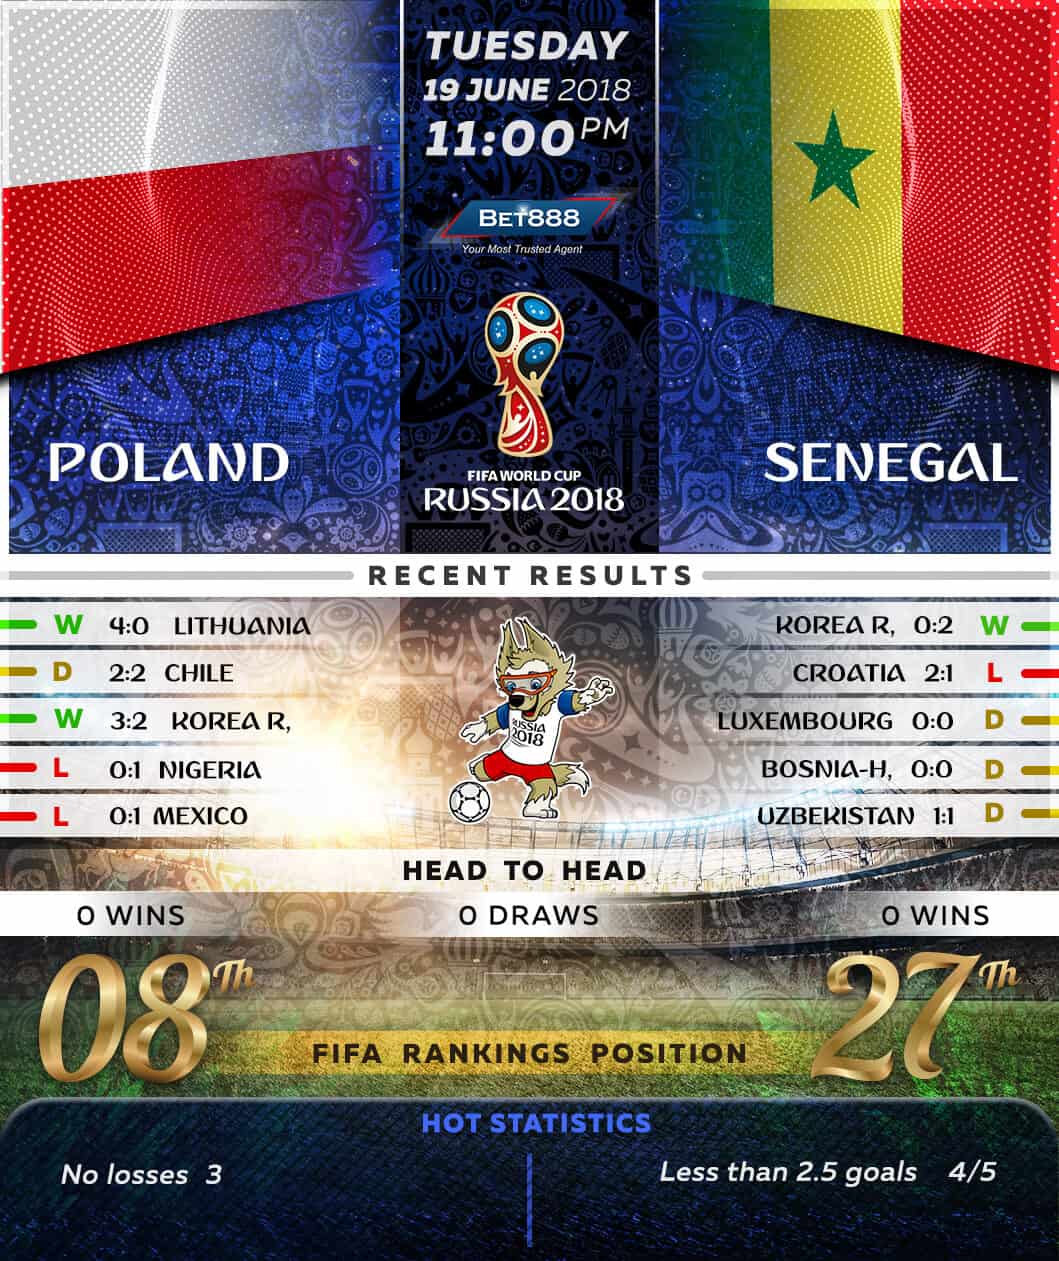 Poland vs Senegal 19/06/18